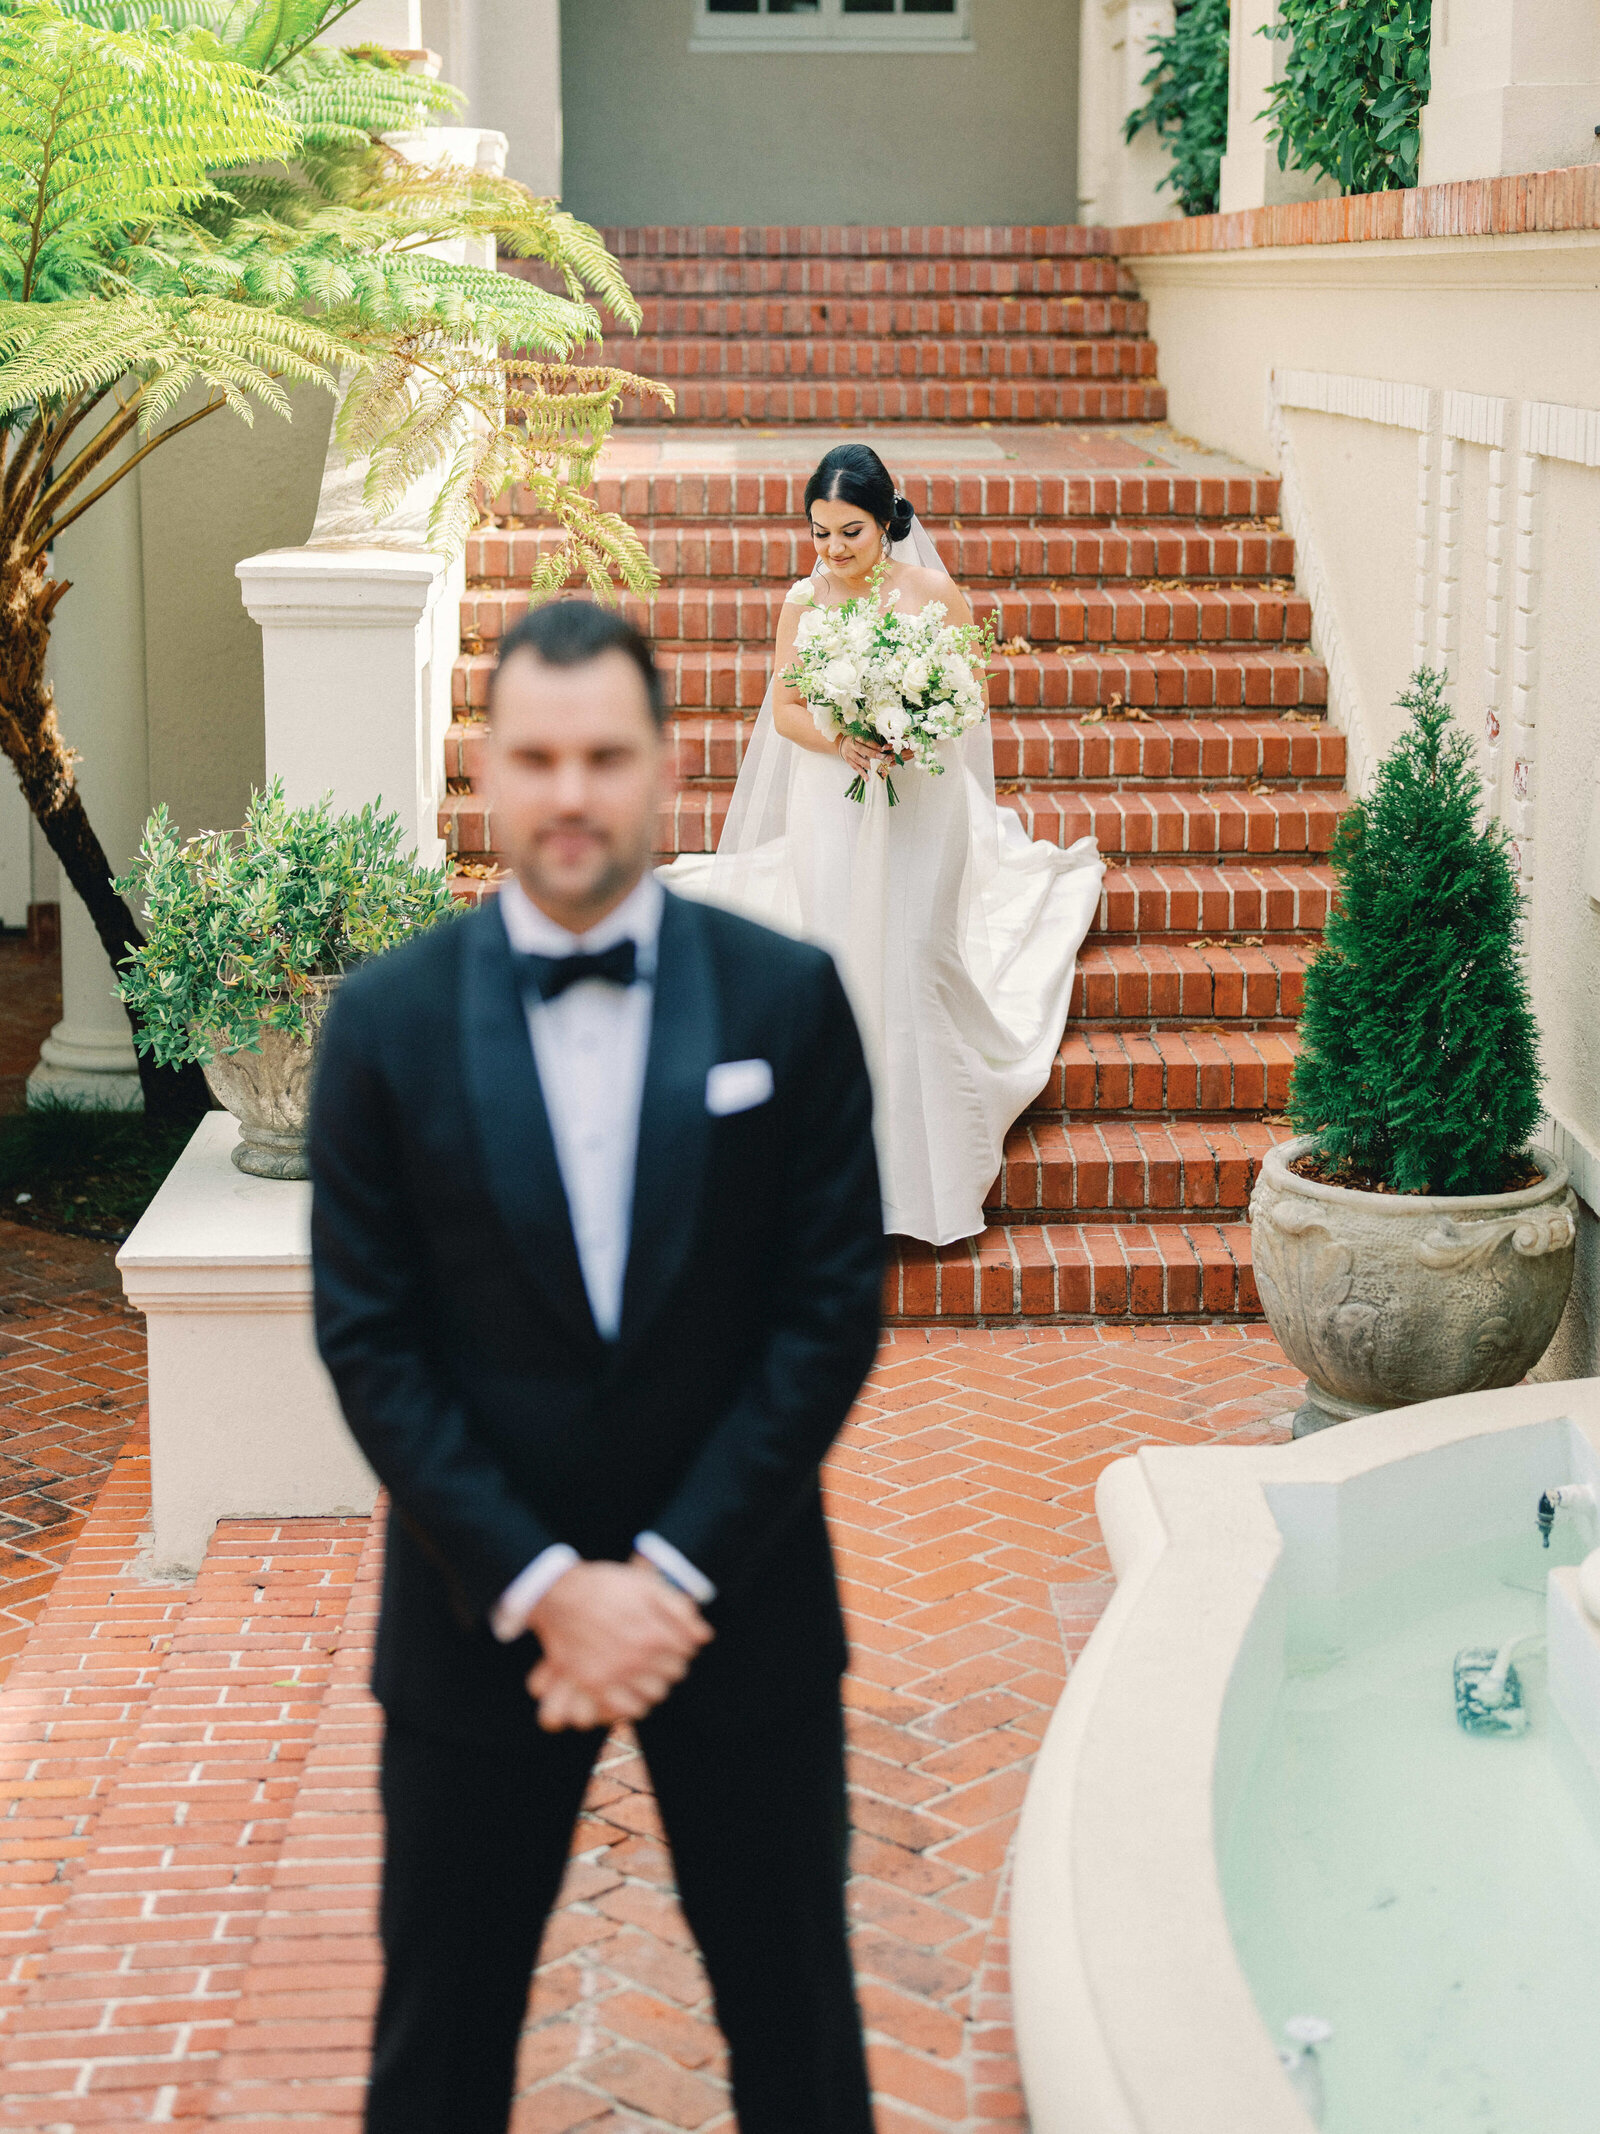 Ana & Andrei's Wedding - Villa Montalvo - Bay Area Wedding Florist (270)